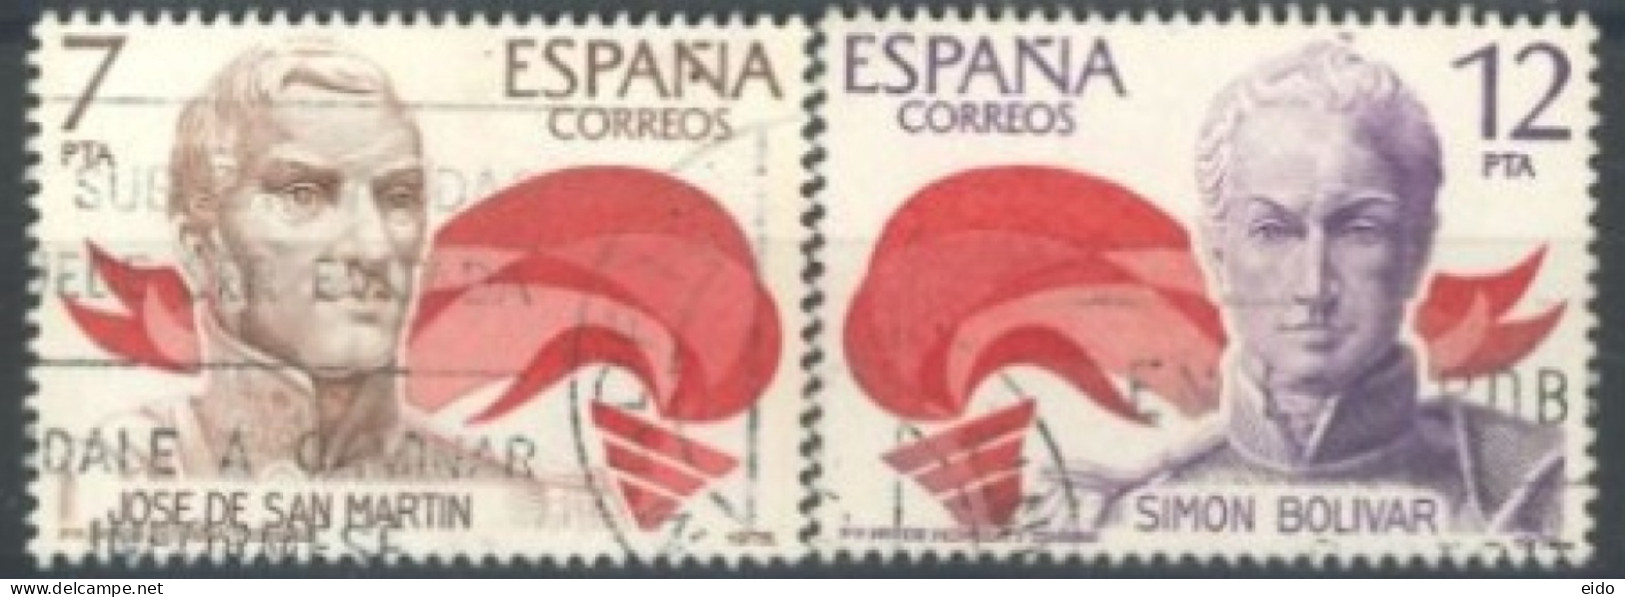 SPAIN, 1978, JOSE DE SAN MARTIN & SIMON BOLIVAR STAMPS COMPLETE SET OF 2, # 2116/17, USED. - Gebraucht